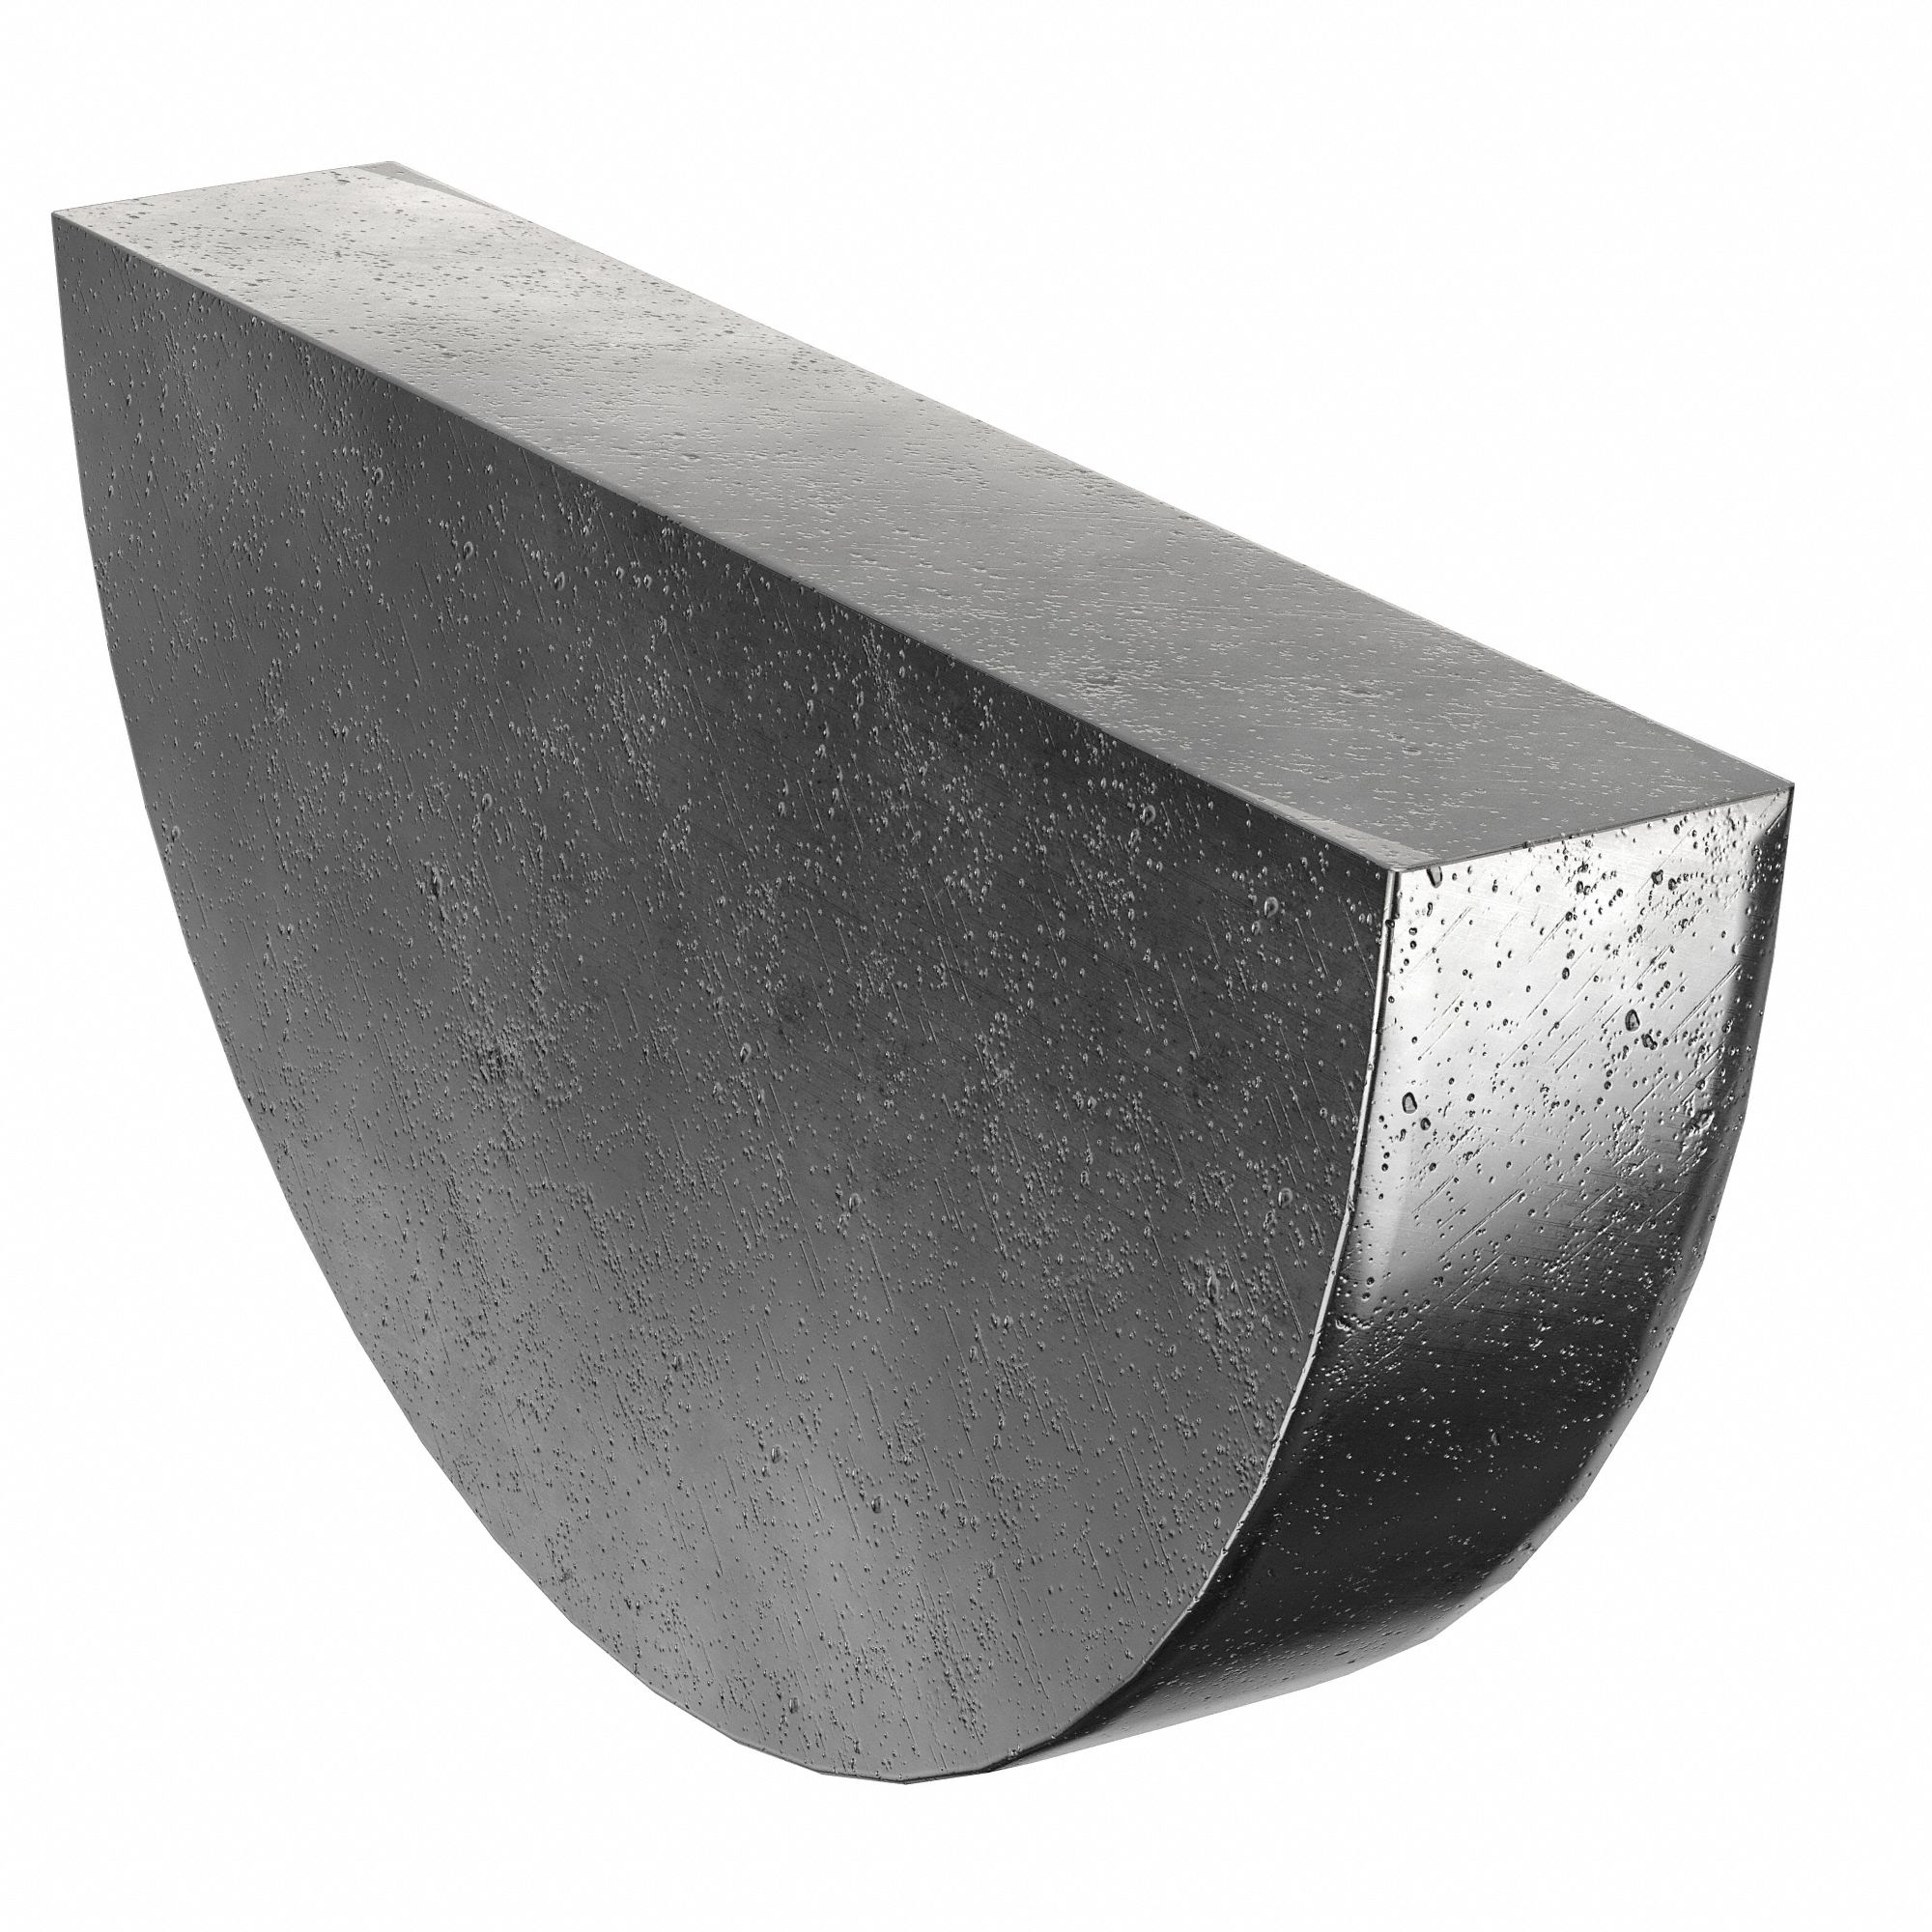 GRAINGER APP Low Carbon Steel Keystock,Over,12 In L,3/16 x 3/16 WWG350187018712 